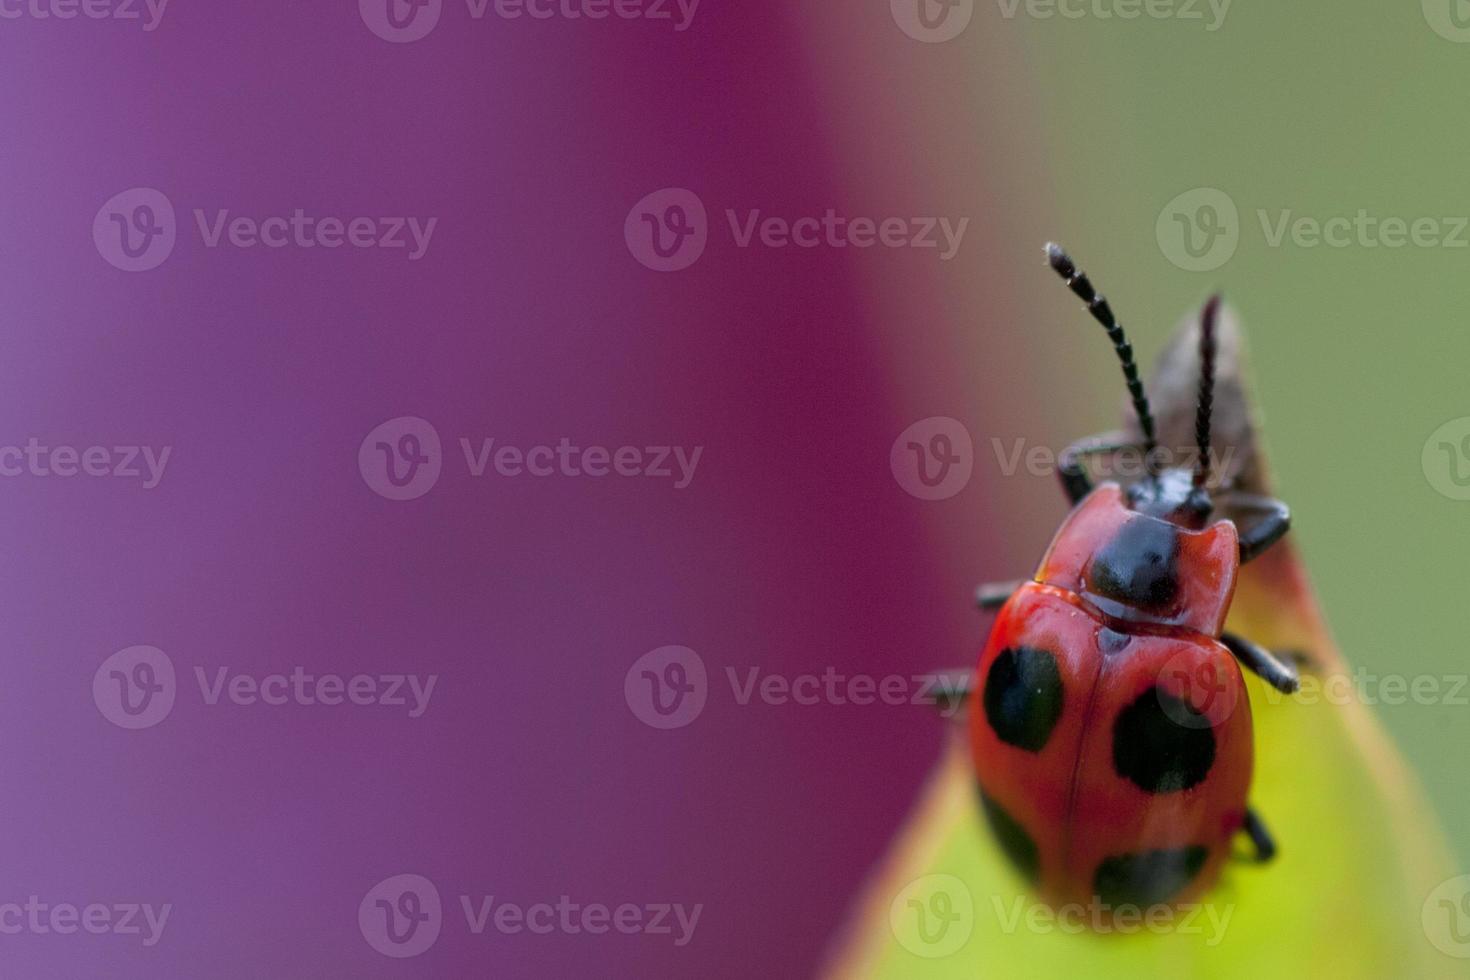 A ladybug hanging on a leaf photo